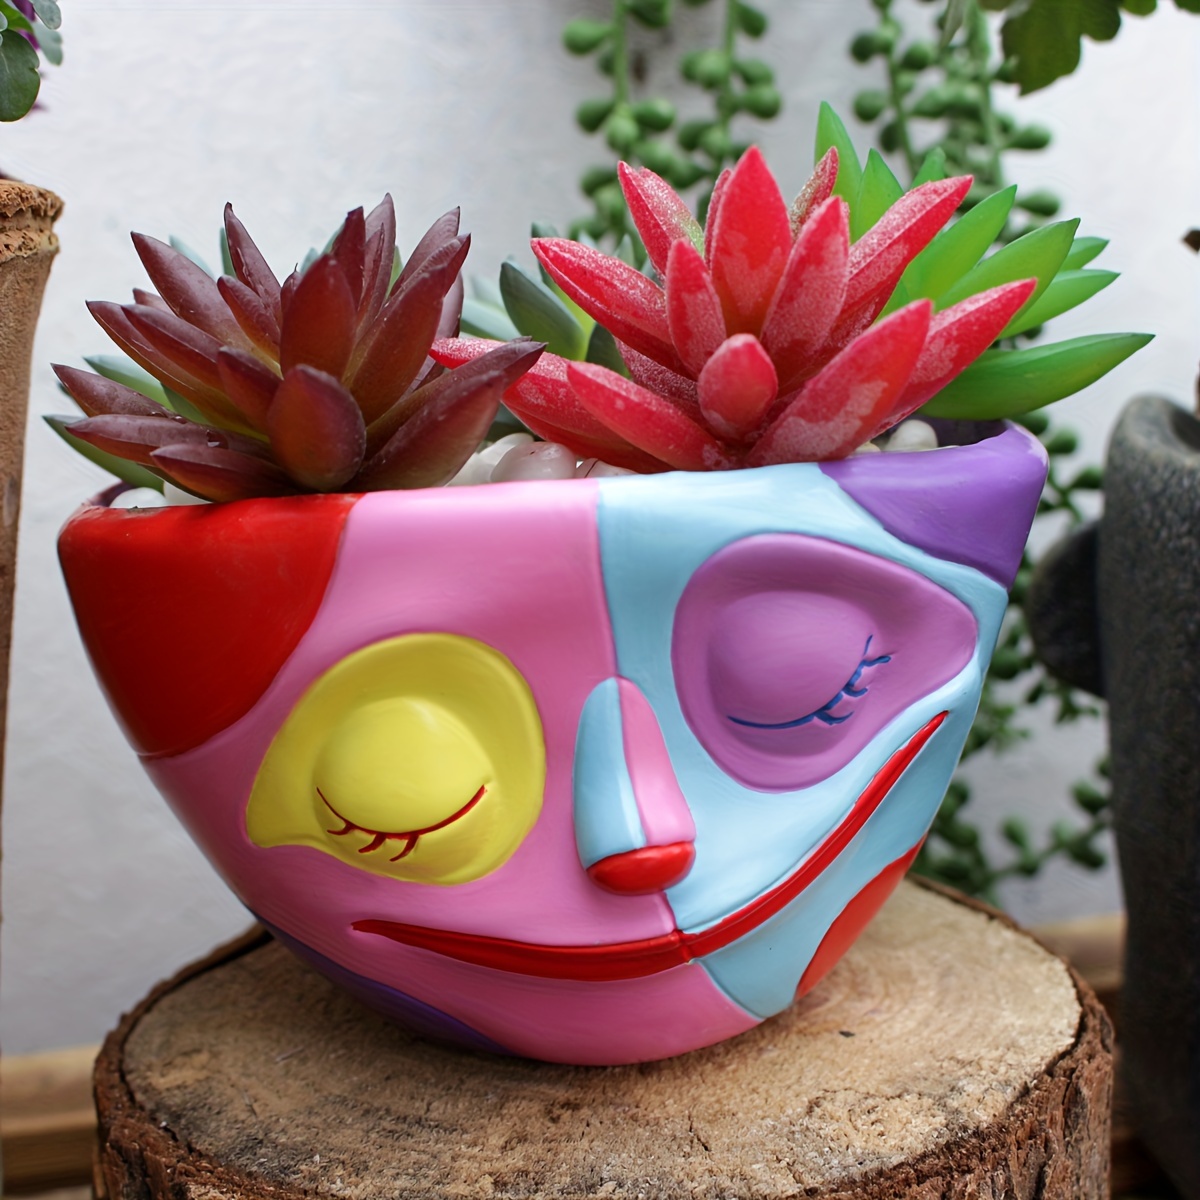 

1pc Colorful Face Flower Pot, Planter Pot With Drainage Holes, For Indoor And Outdoor, Succulent Plant Pots, Plants Desk Display Resin Pots, Fower Arrangement Home Decoration